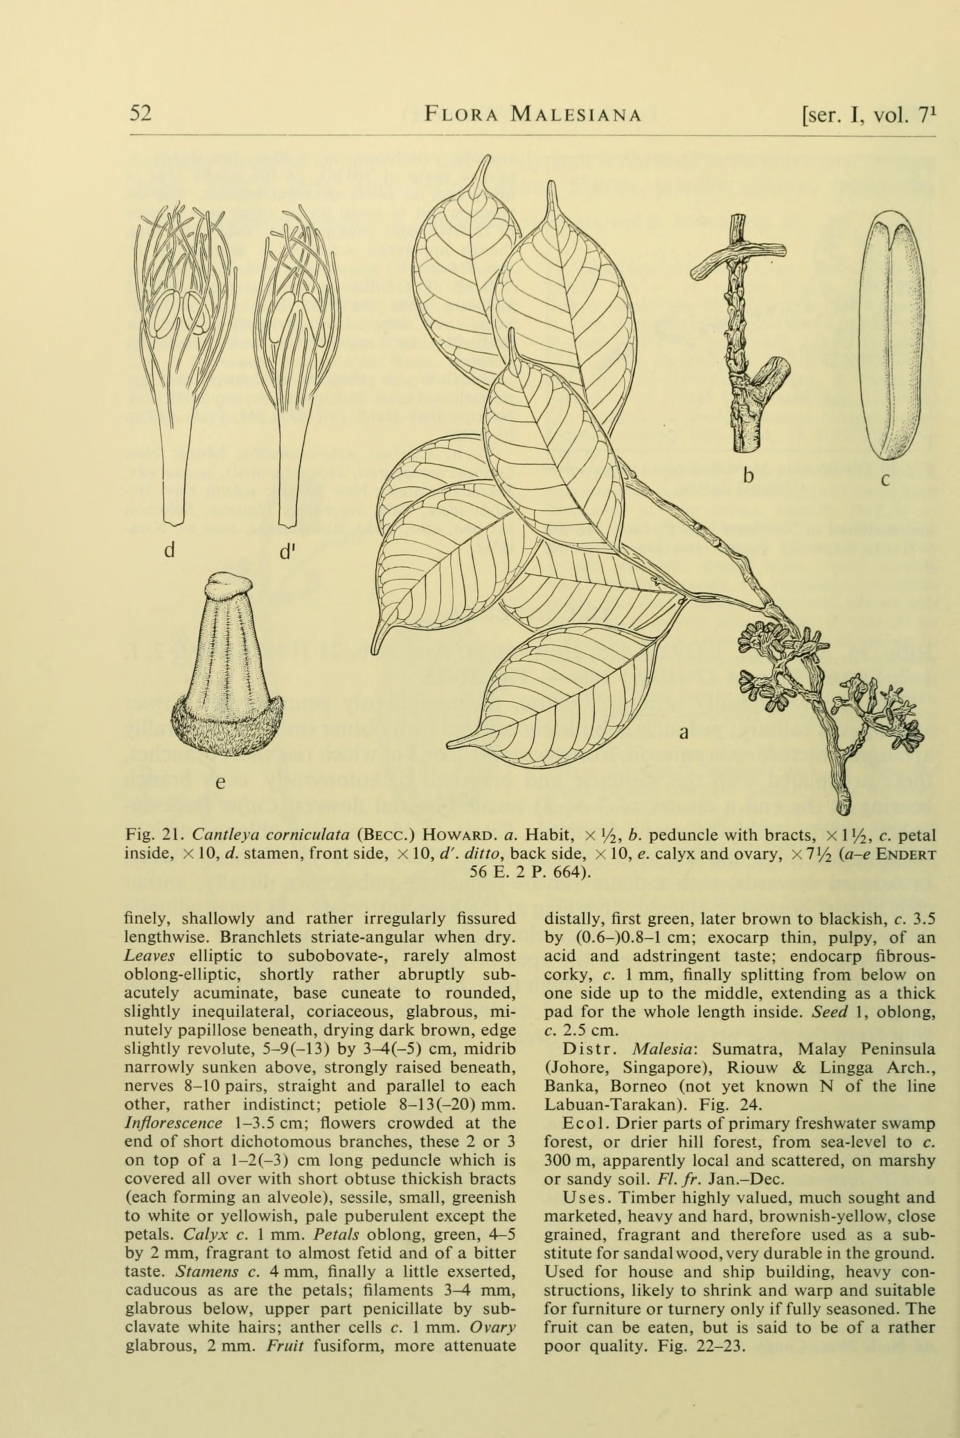 Cantleya corniculata